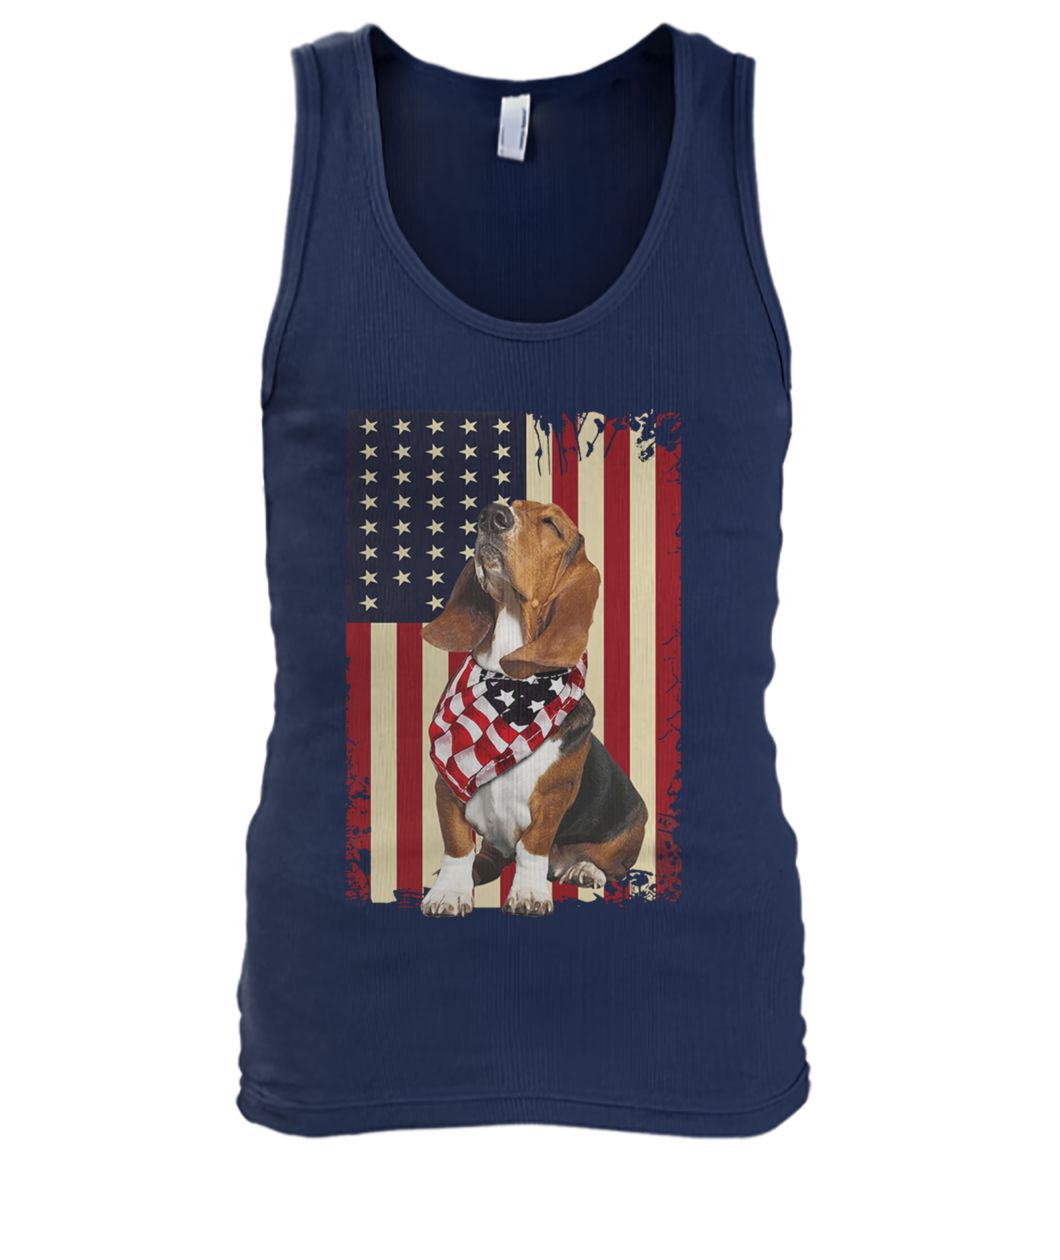 USA patriotic dog basset hound american flag men's tank top